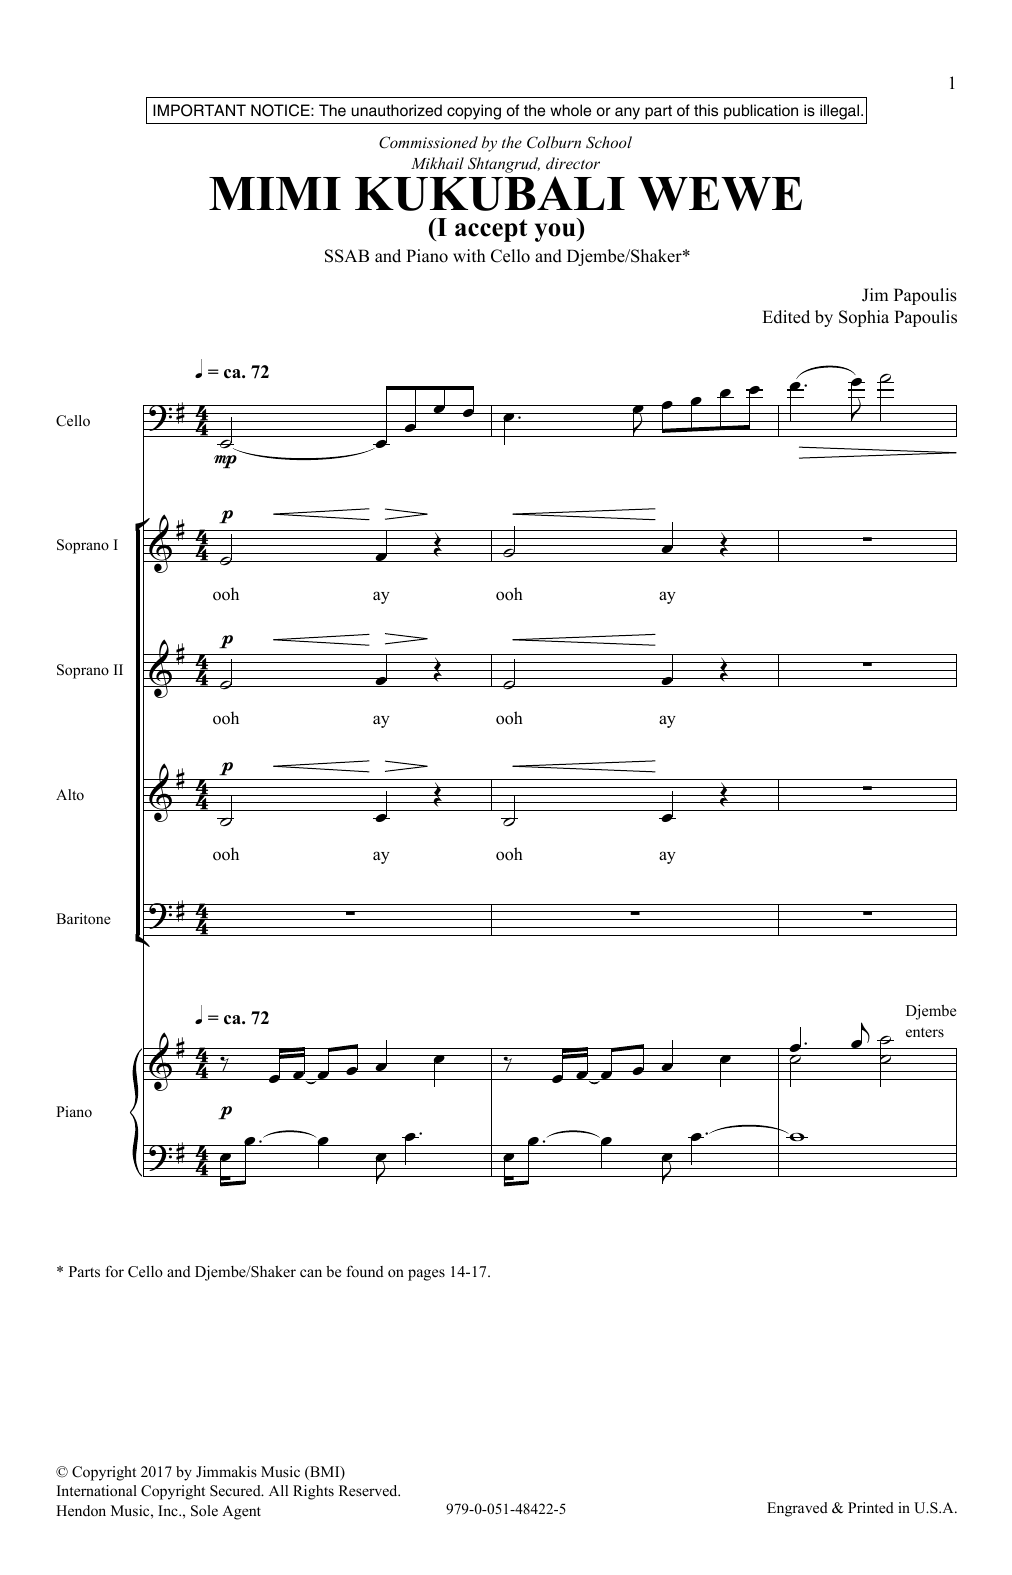 Jim Papoulis Mimi Kukubali Wewe sheet music notes and chords arranged for SATB Choir